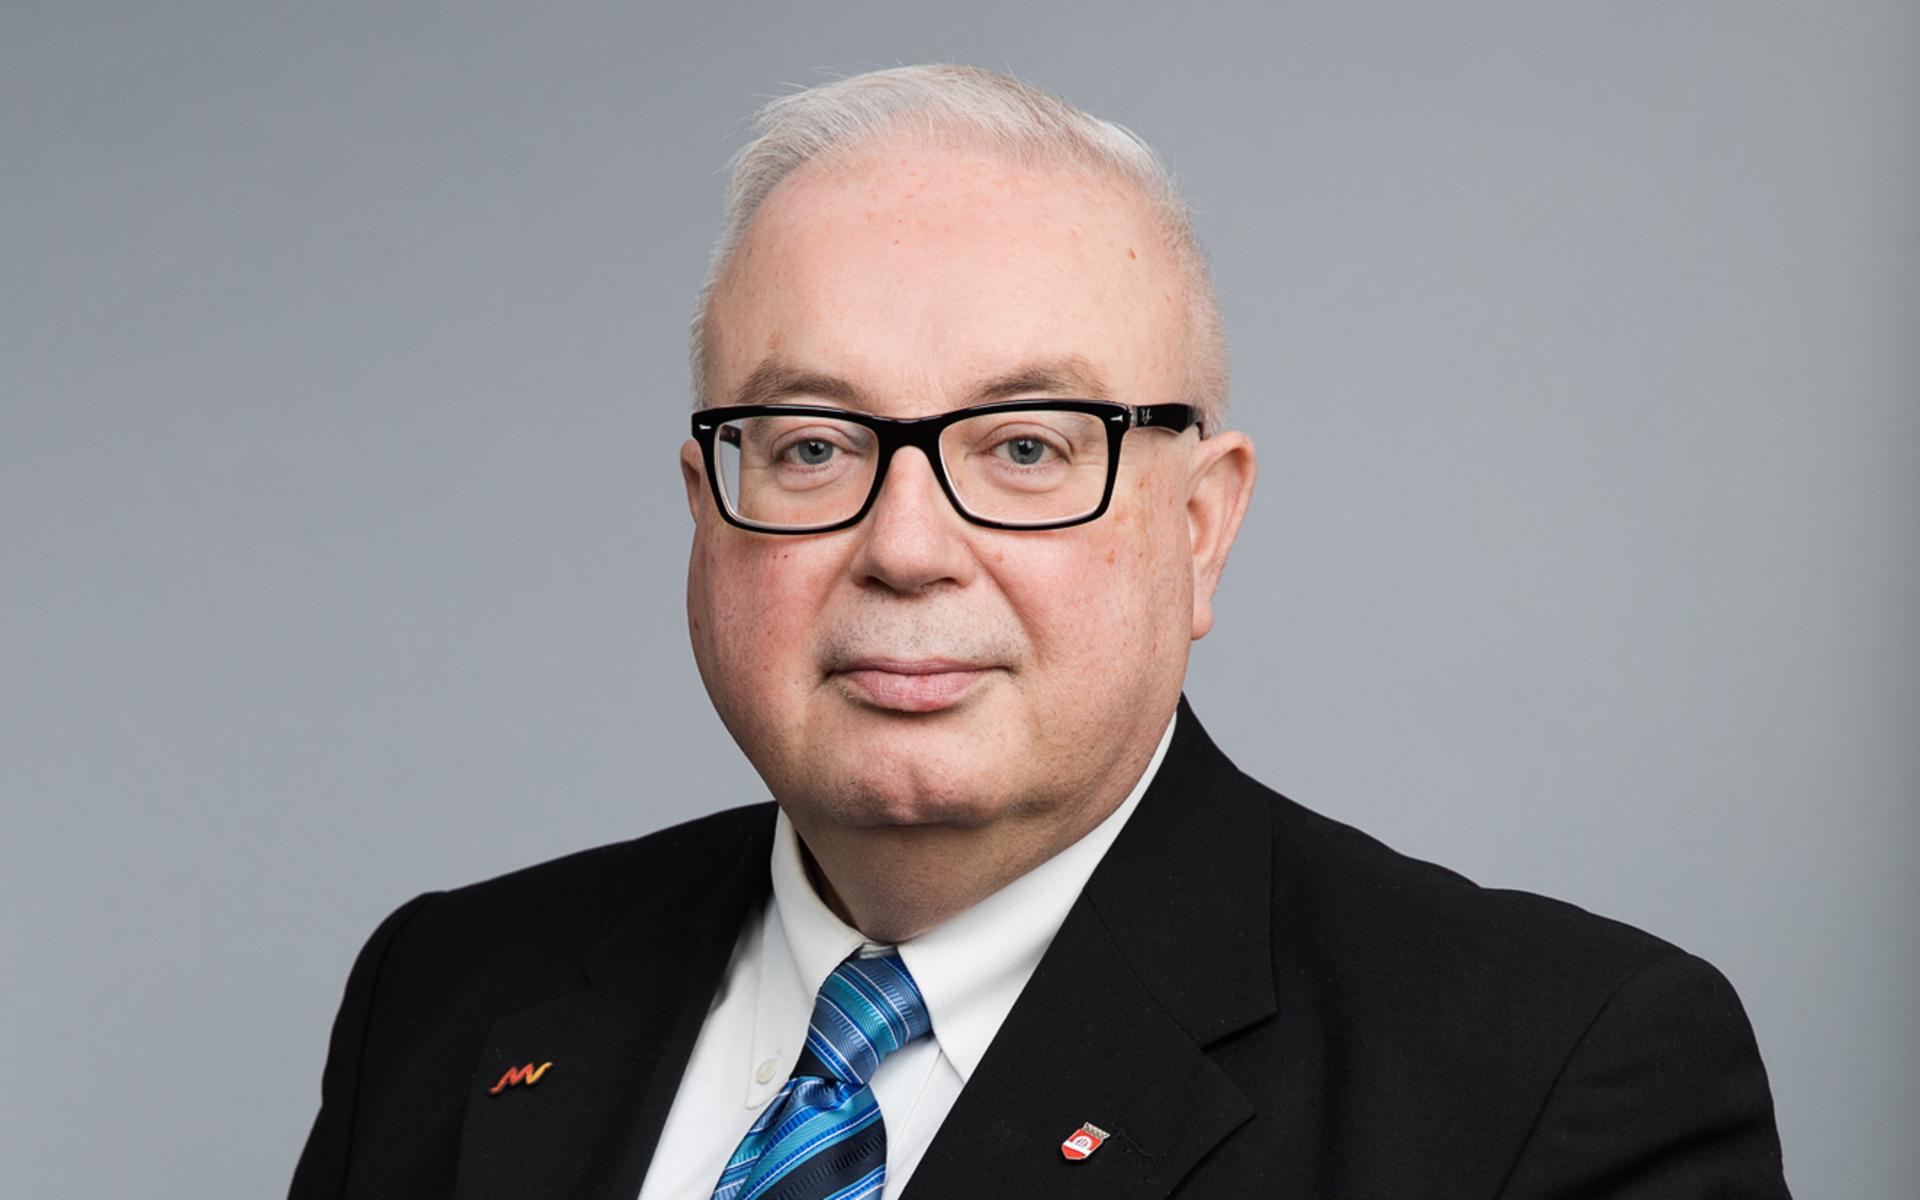 Kristian Vramsten (M), kommunstyrelsens ordförande.